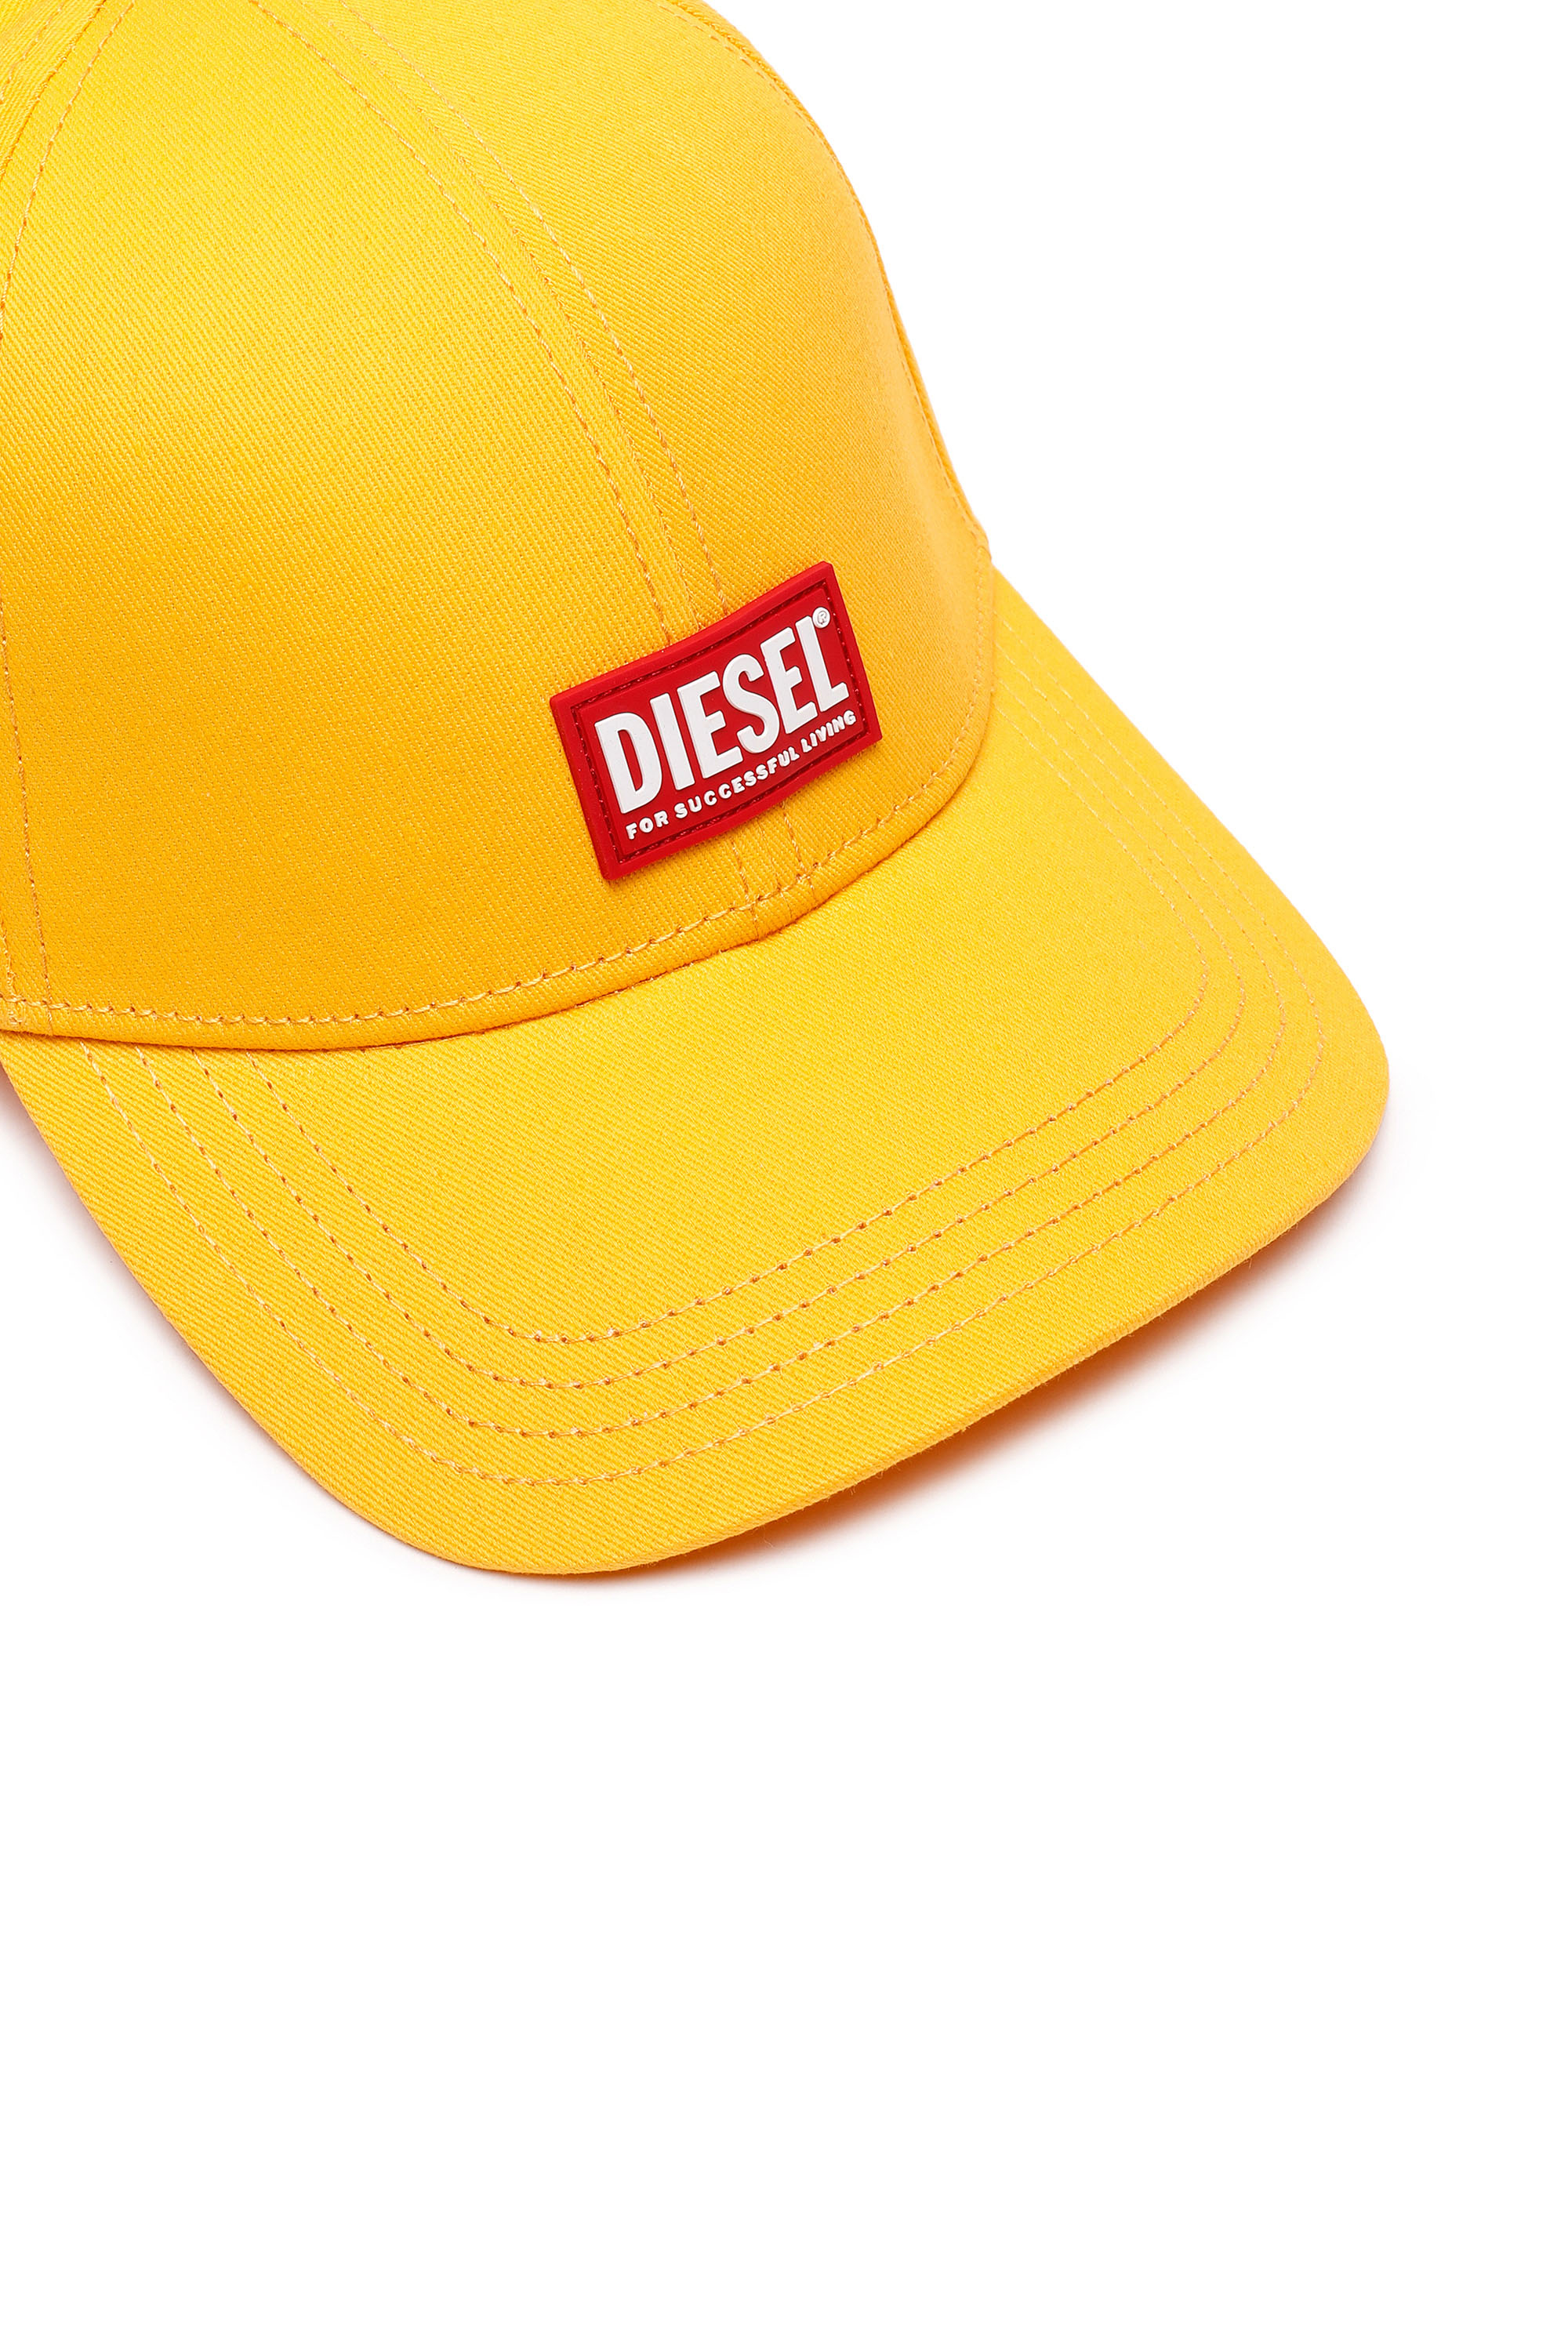 Diesel - CORRY-GUM, Yellow - Image 3